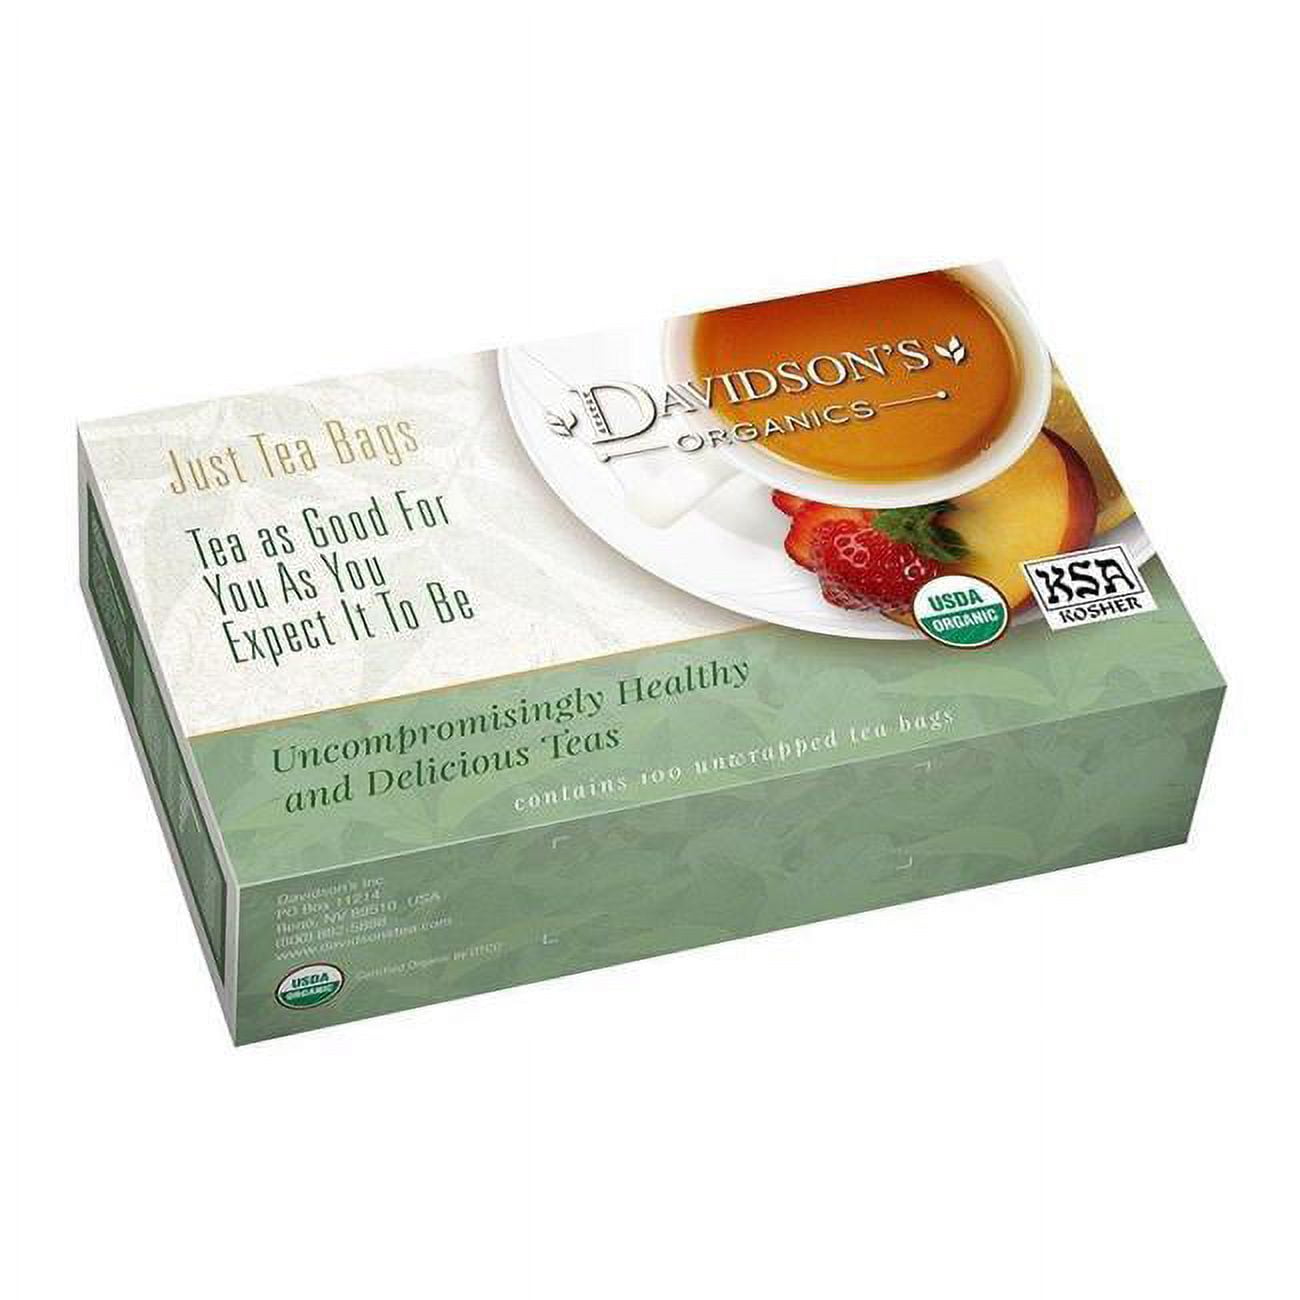 Picture of Davidsons Organics 248 Keemun Congou Tea - Box of 100